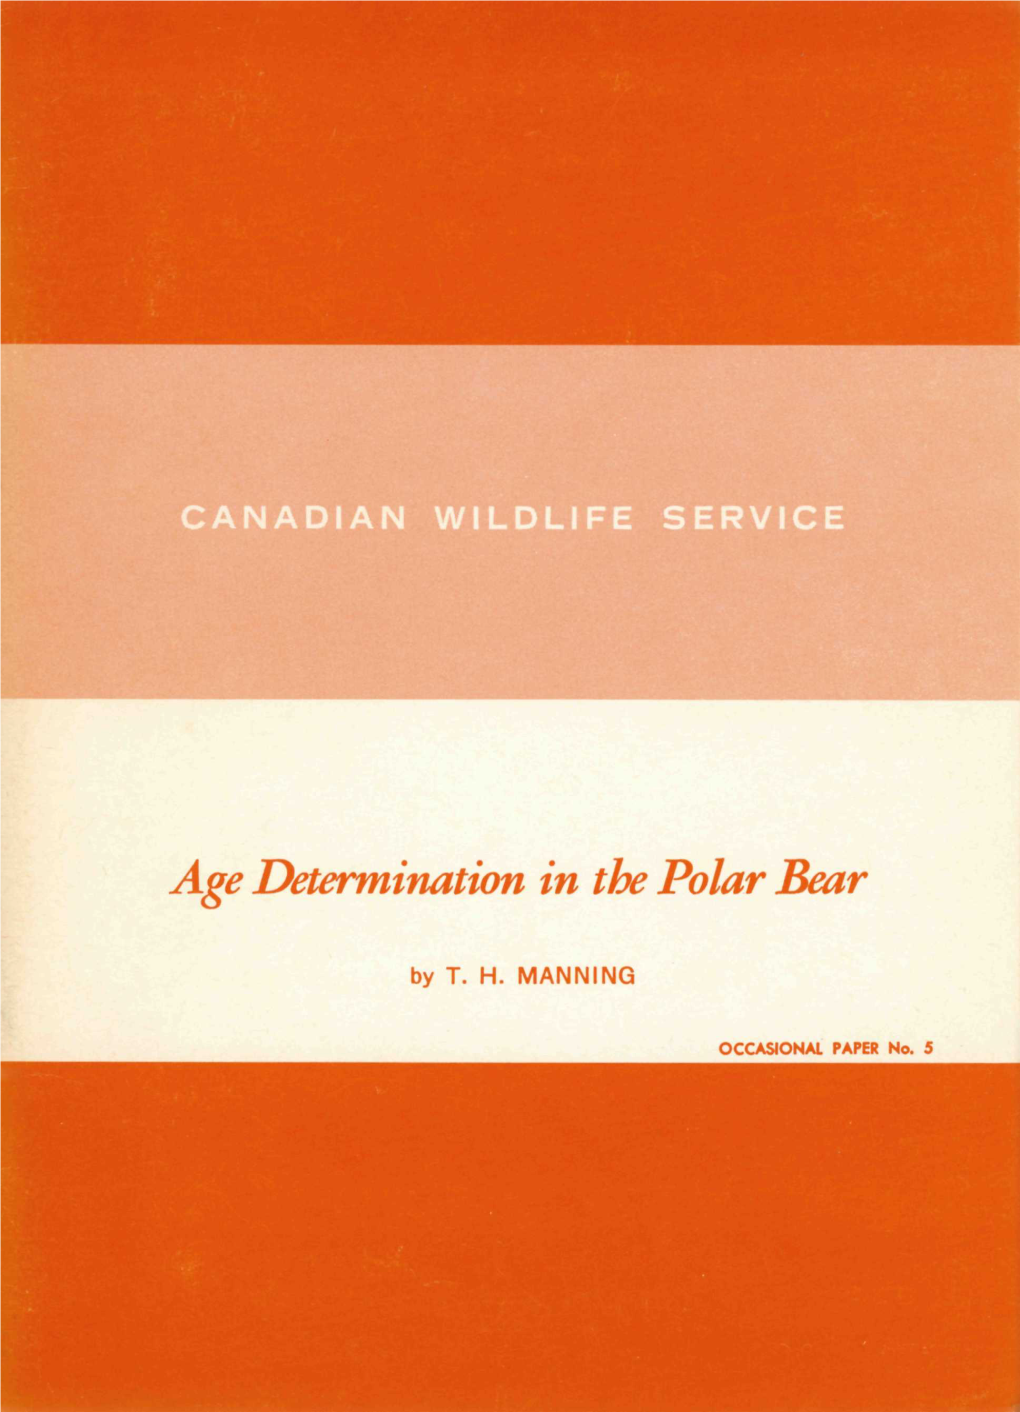 Age Determination in the Polar Bear